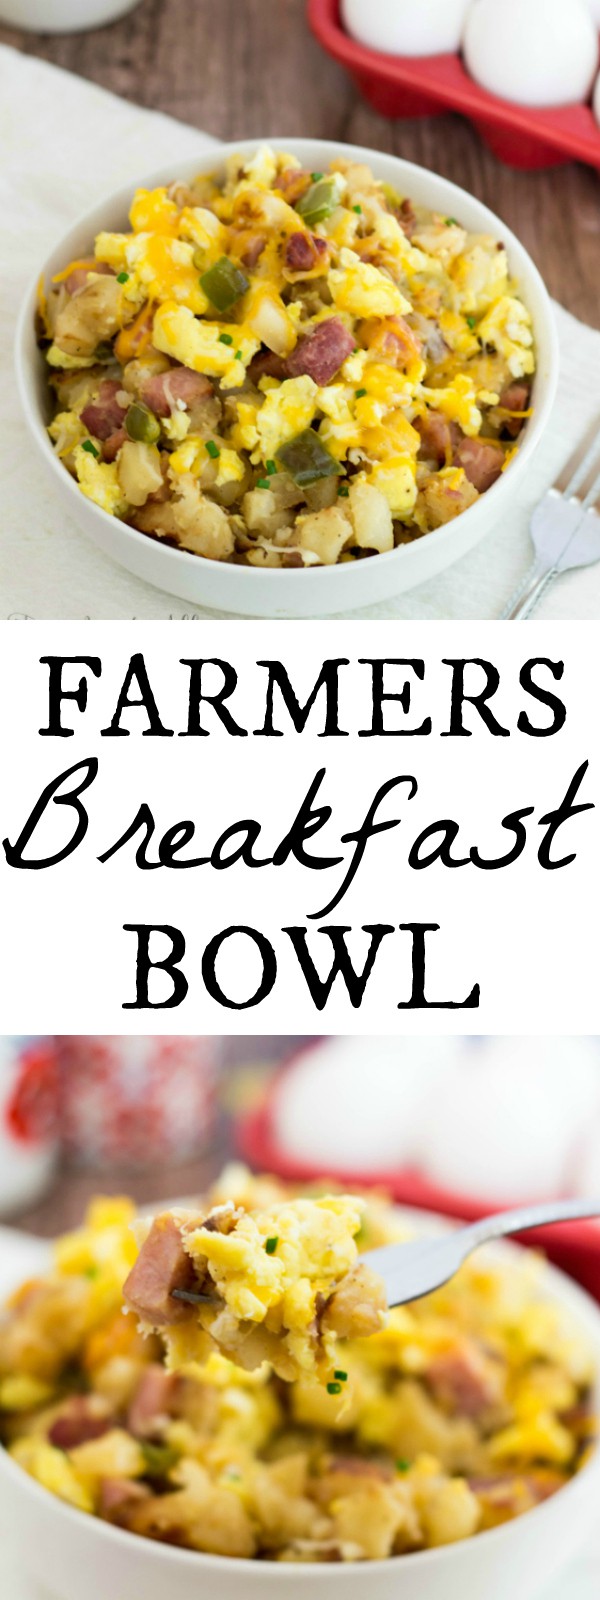 Farmers Breakfast Bowl Collage